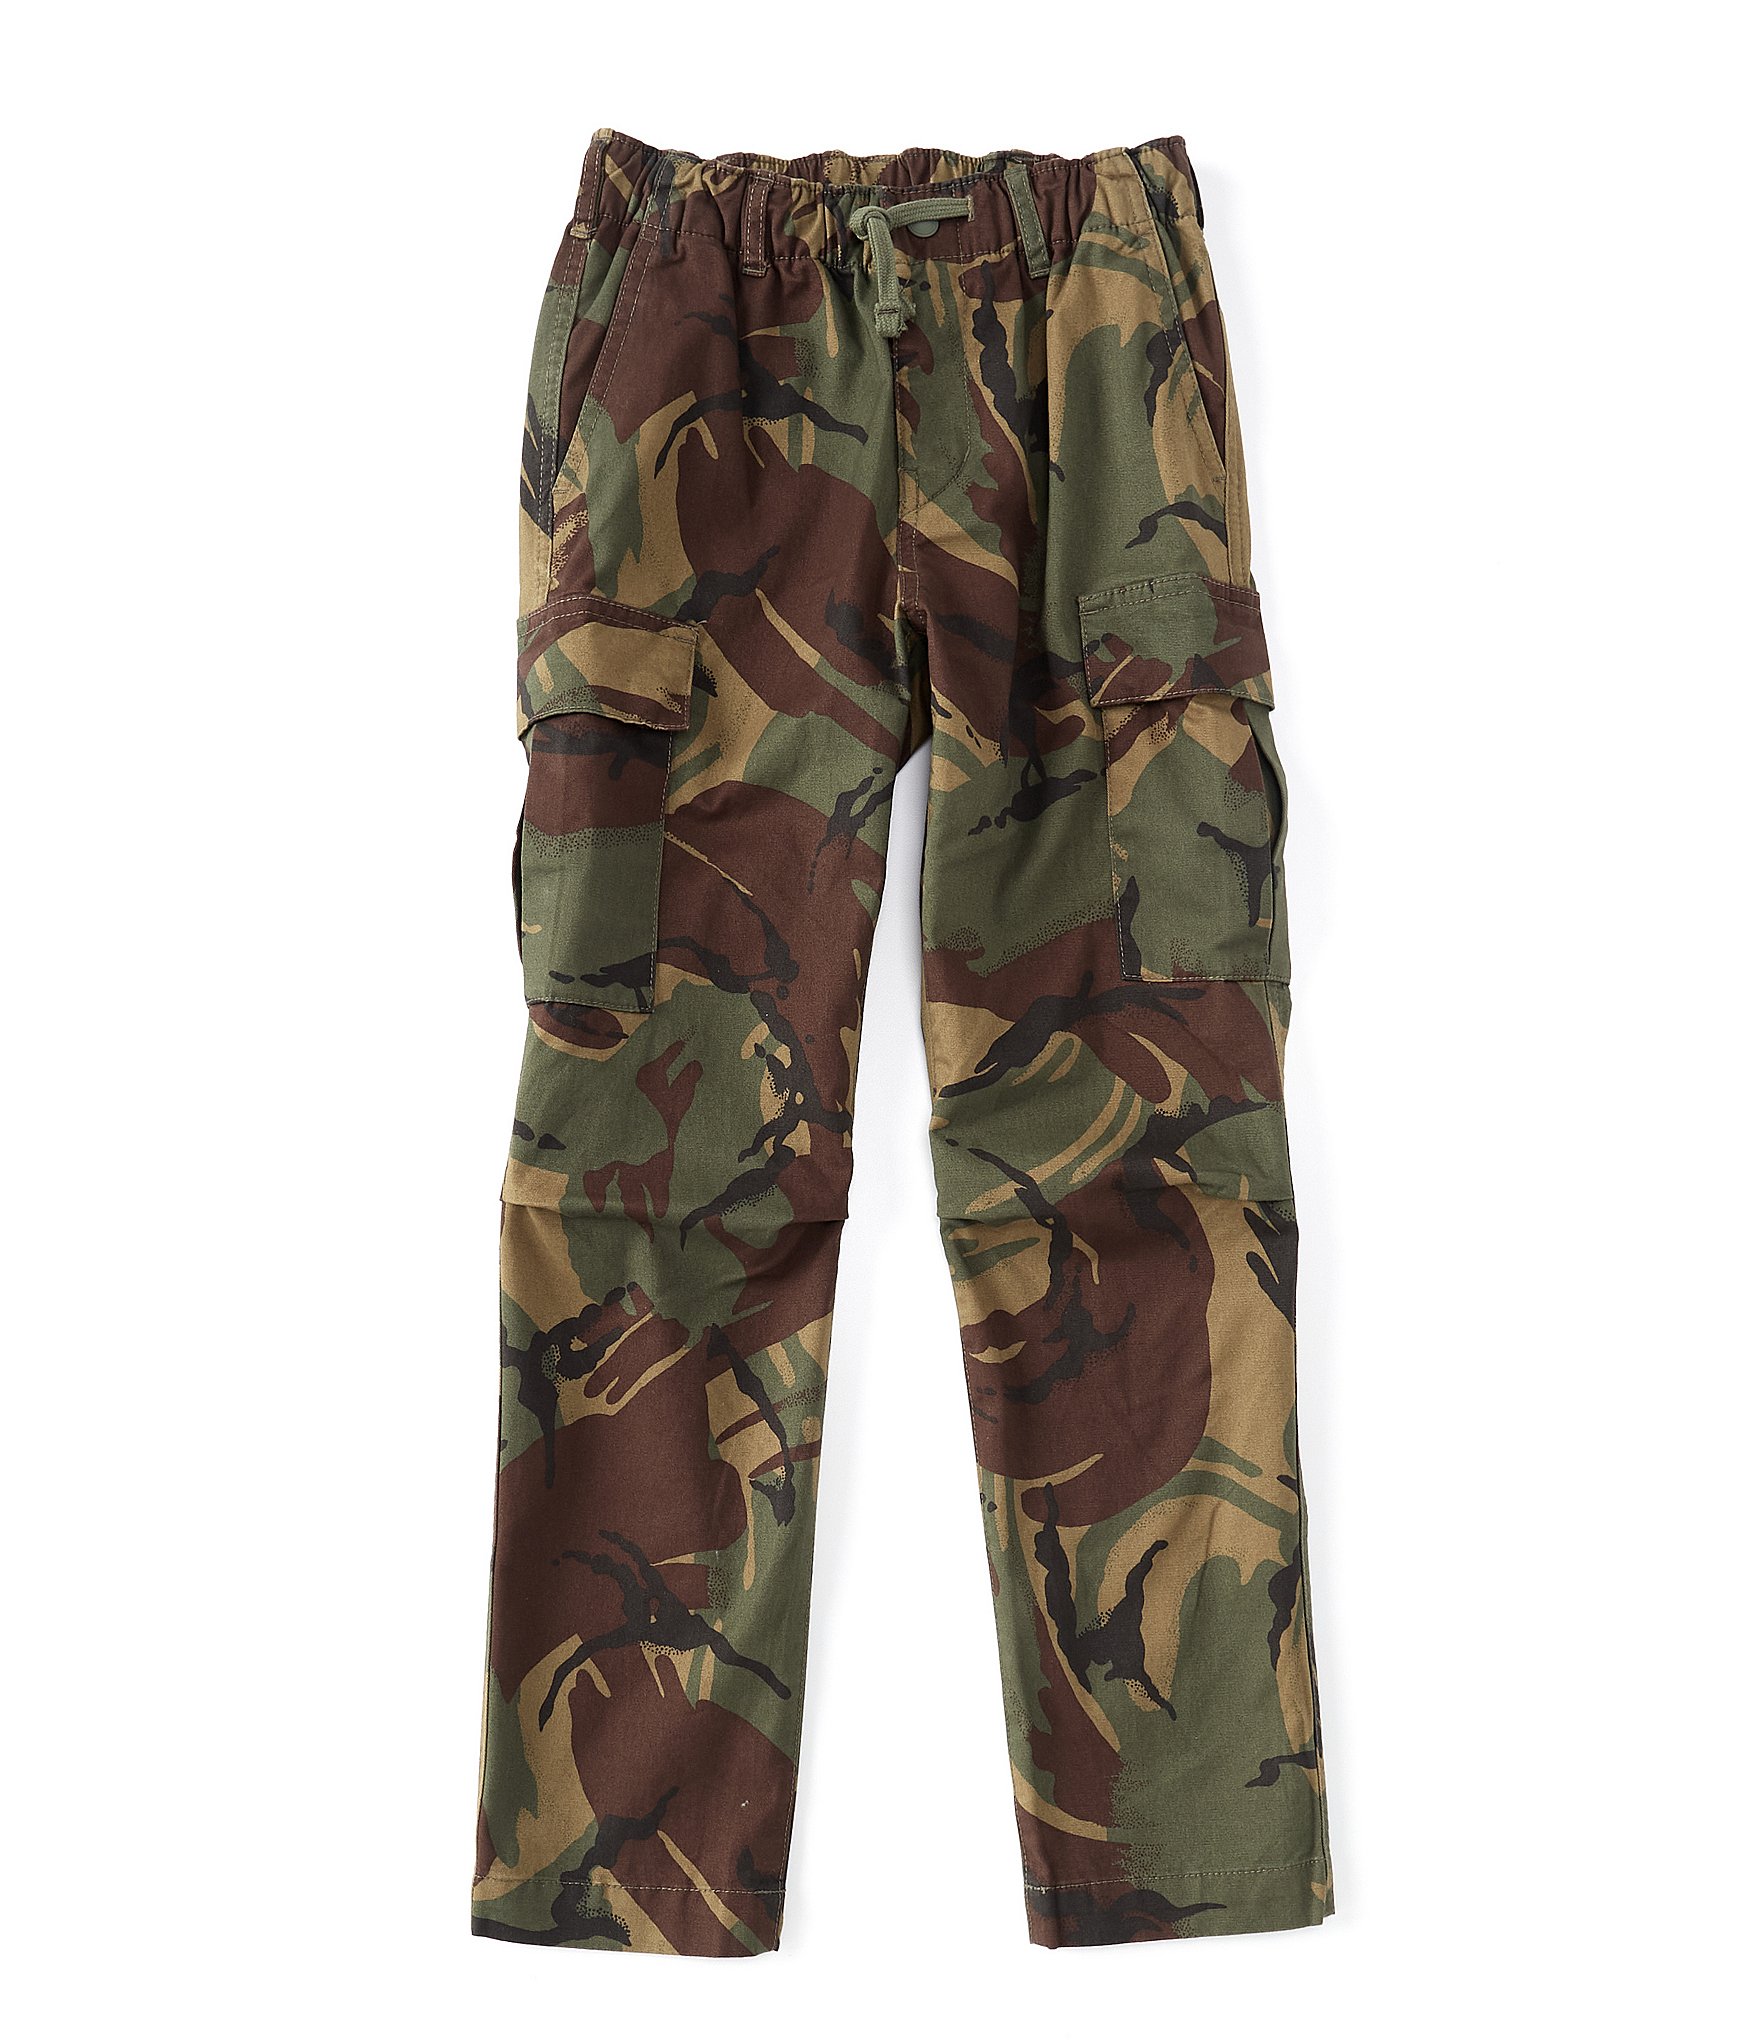 Vans Depot Cargo Pants Woodland Black Camo Camouflage Men's Size 28 × 28 |  eBay